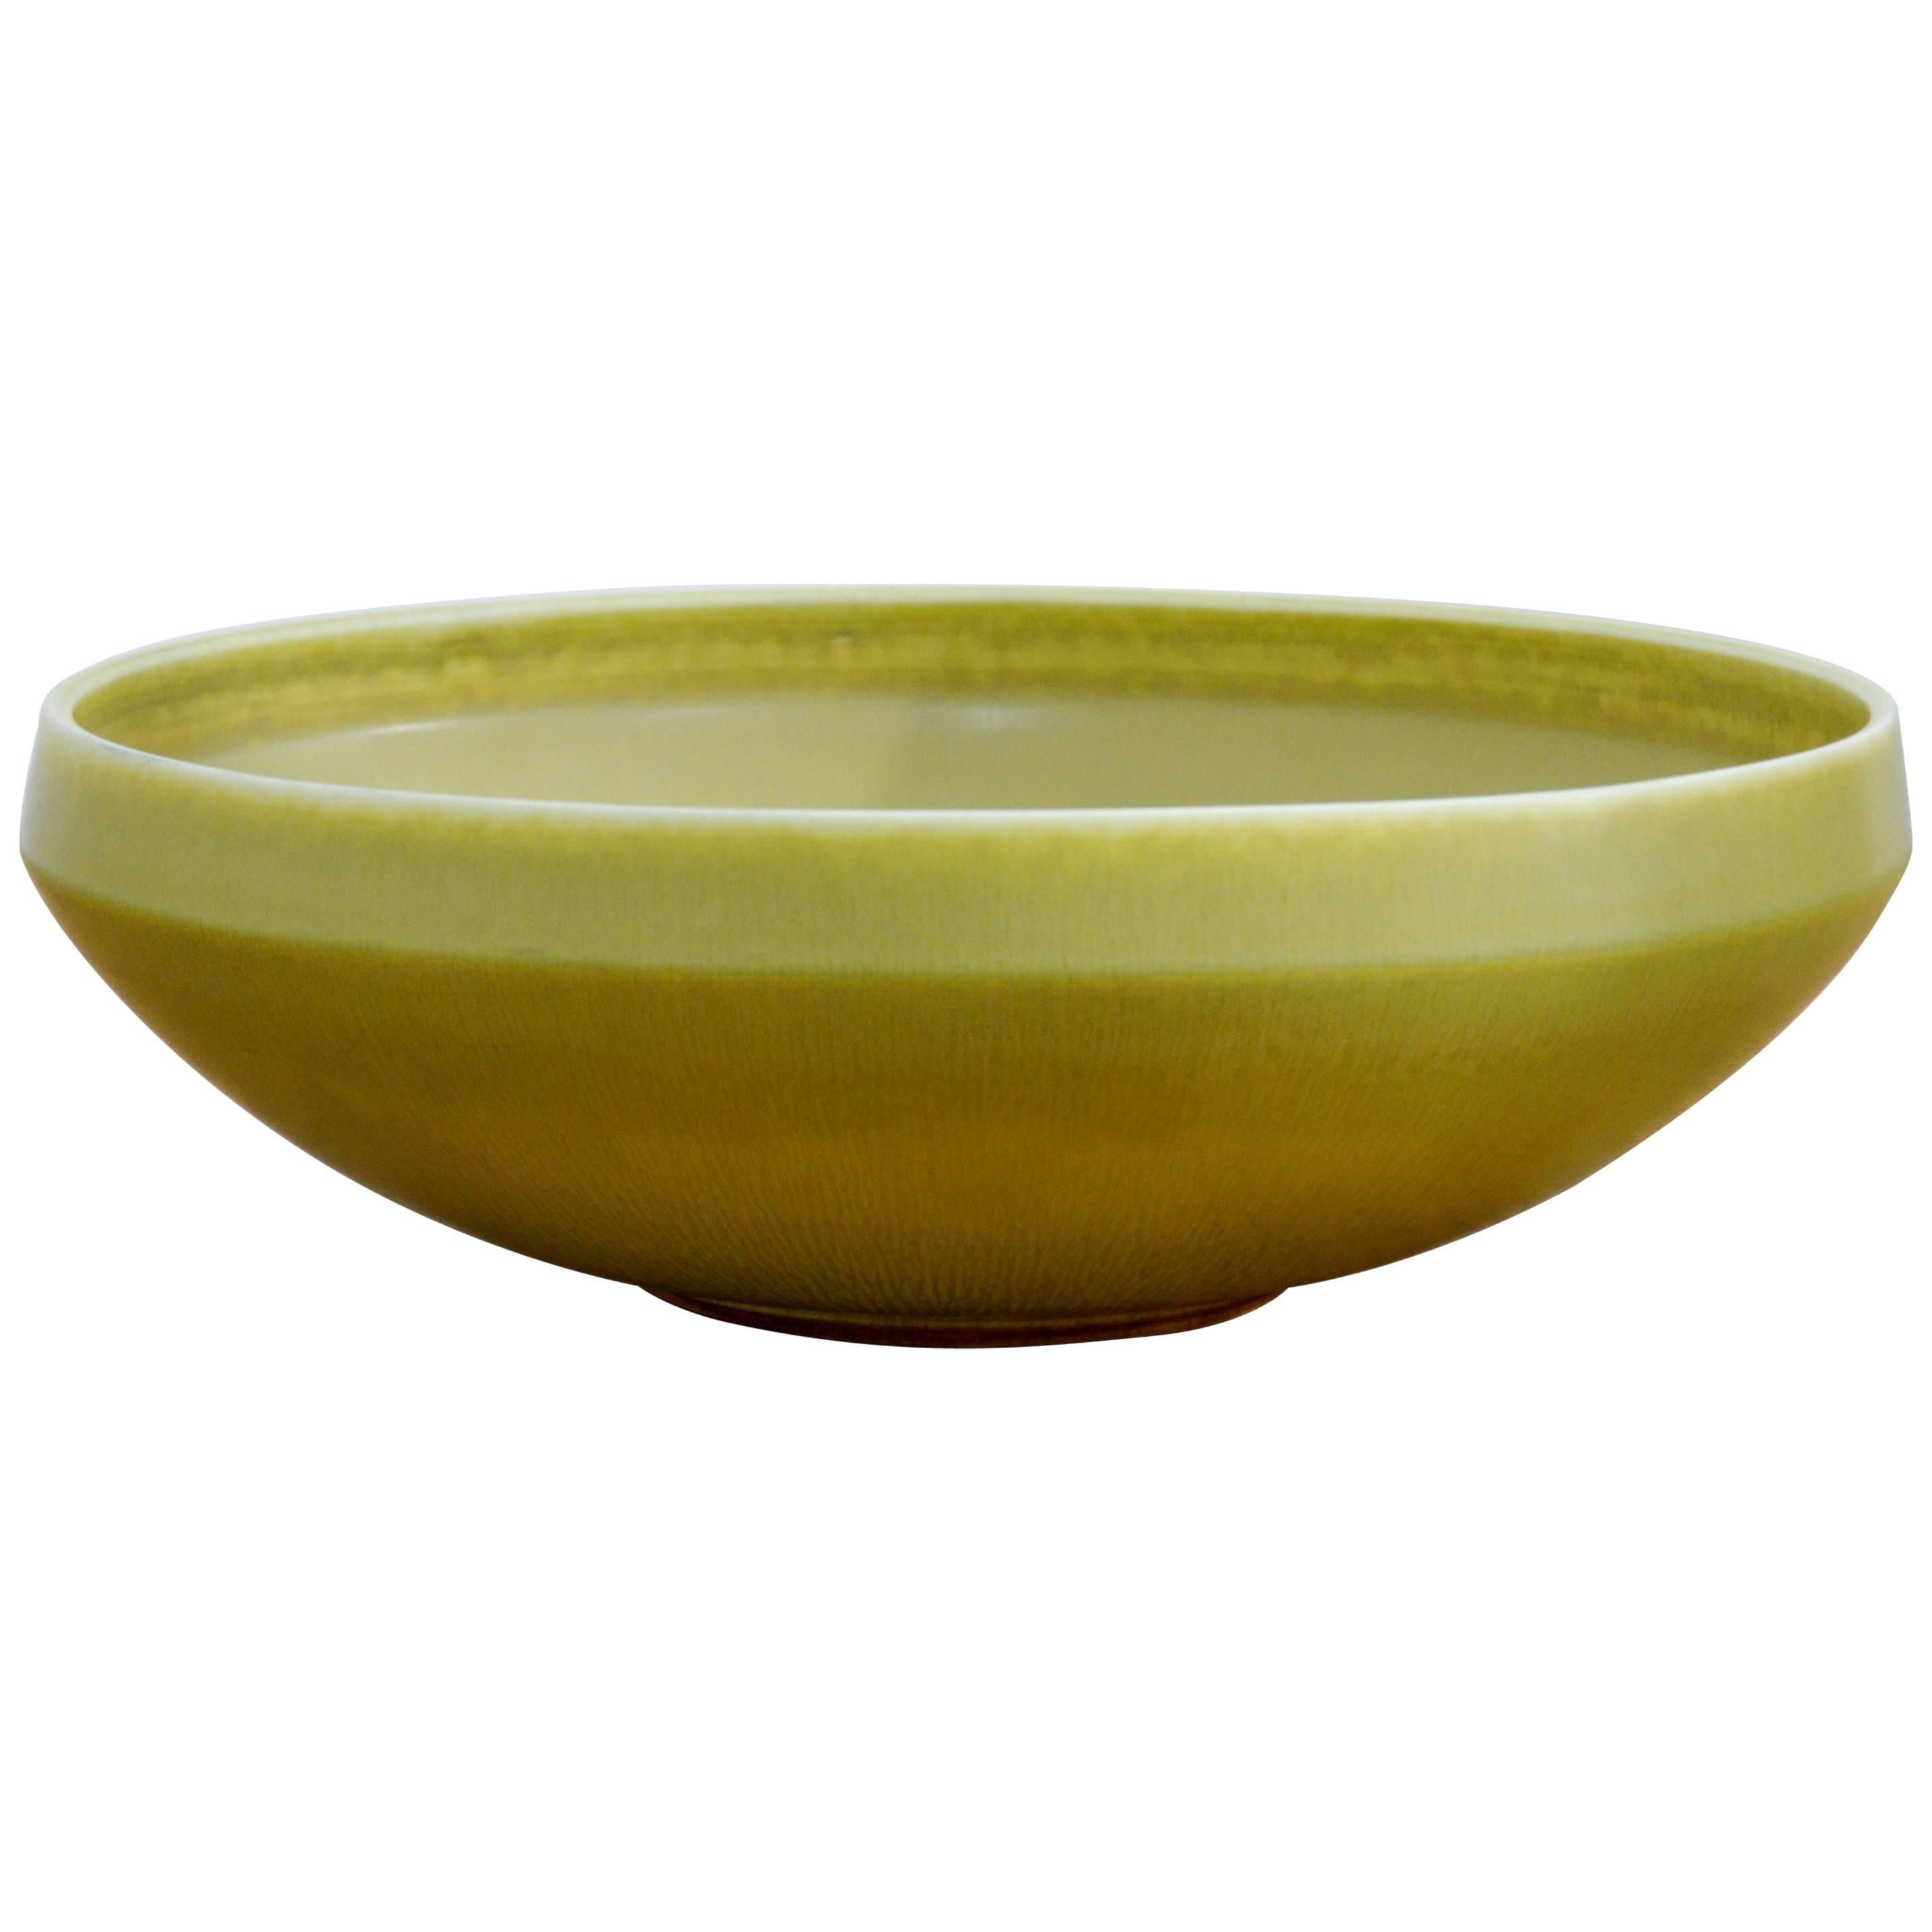 Ceramic Bowl by Berndt Friberg for Gustavsberg